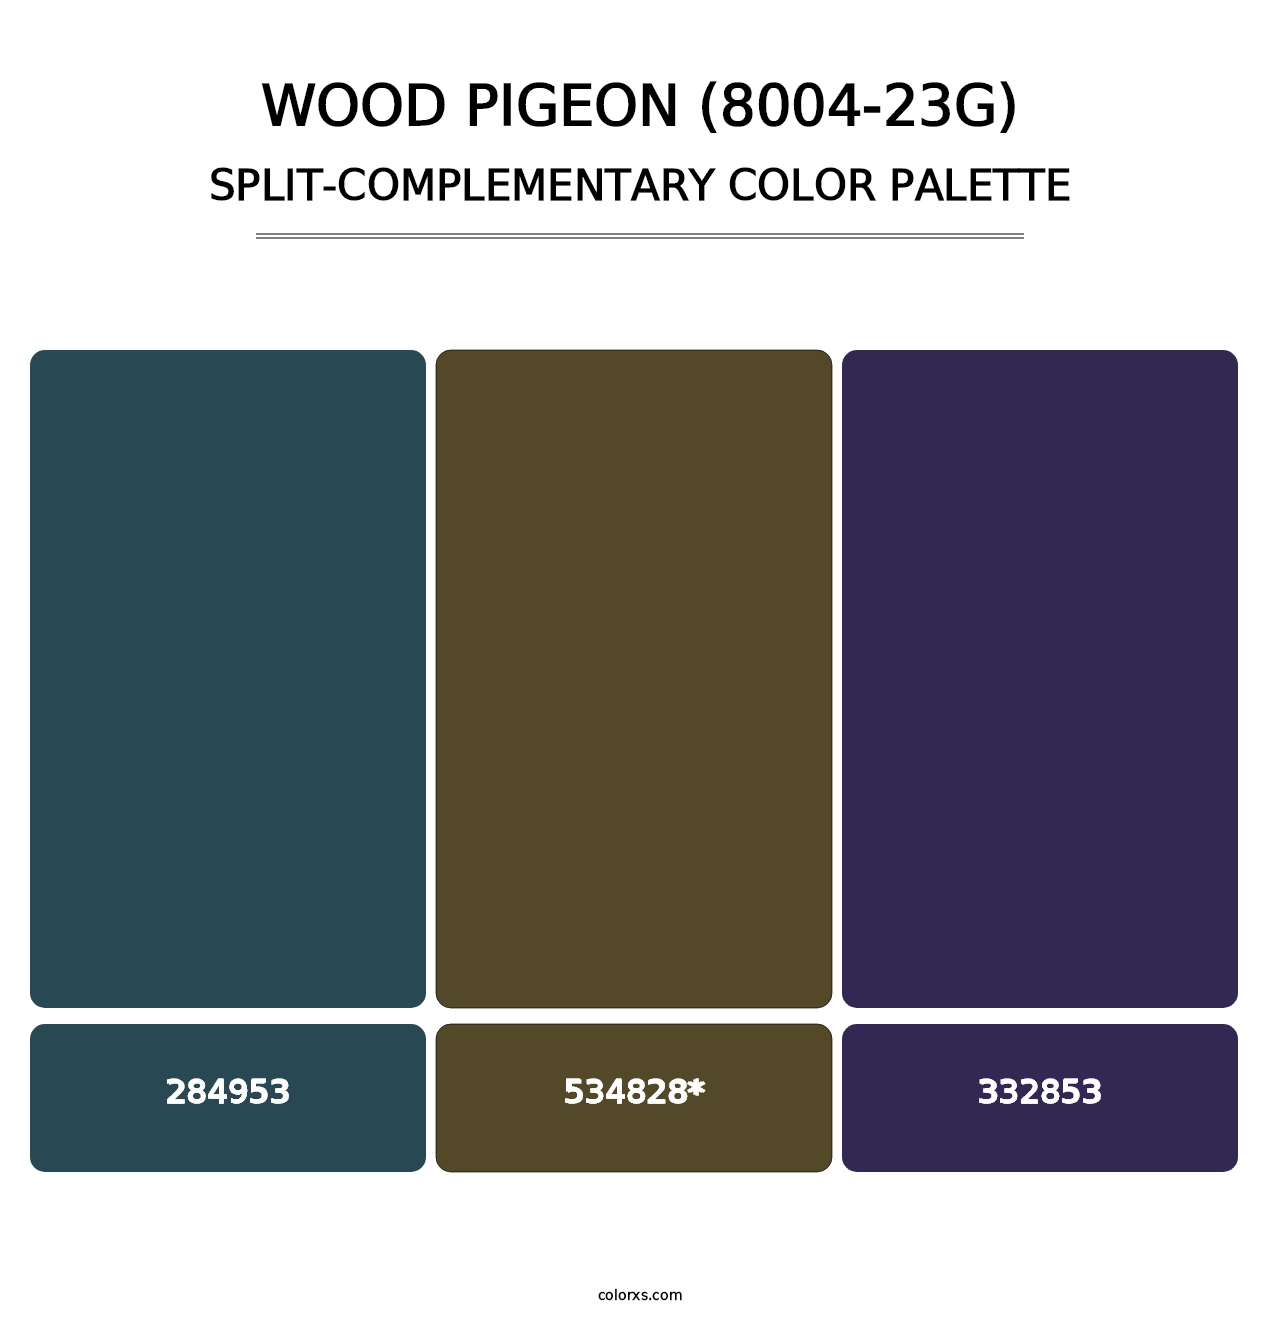 Wood Pigeon (8004-23G) - Split-Complementary Color Palette